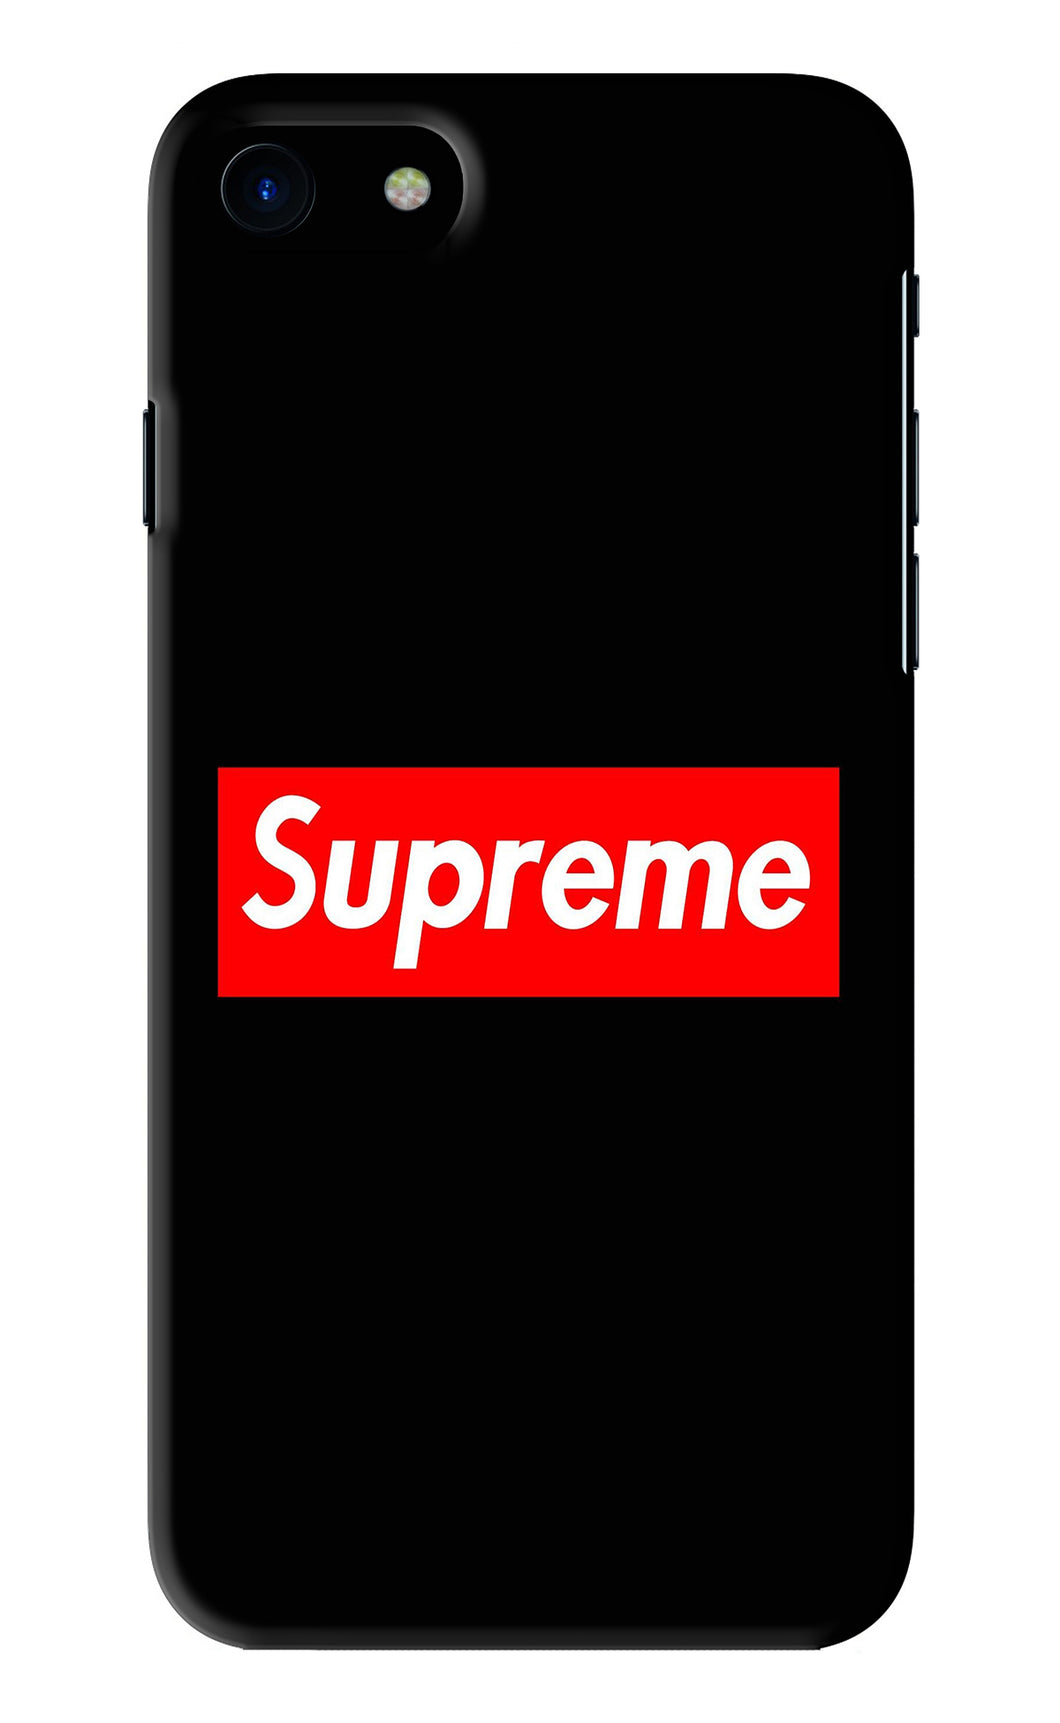 Supreme iPhone SE Back Skin Wrap